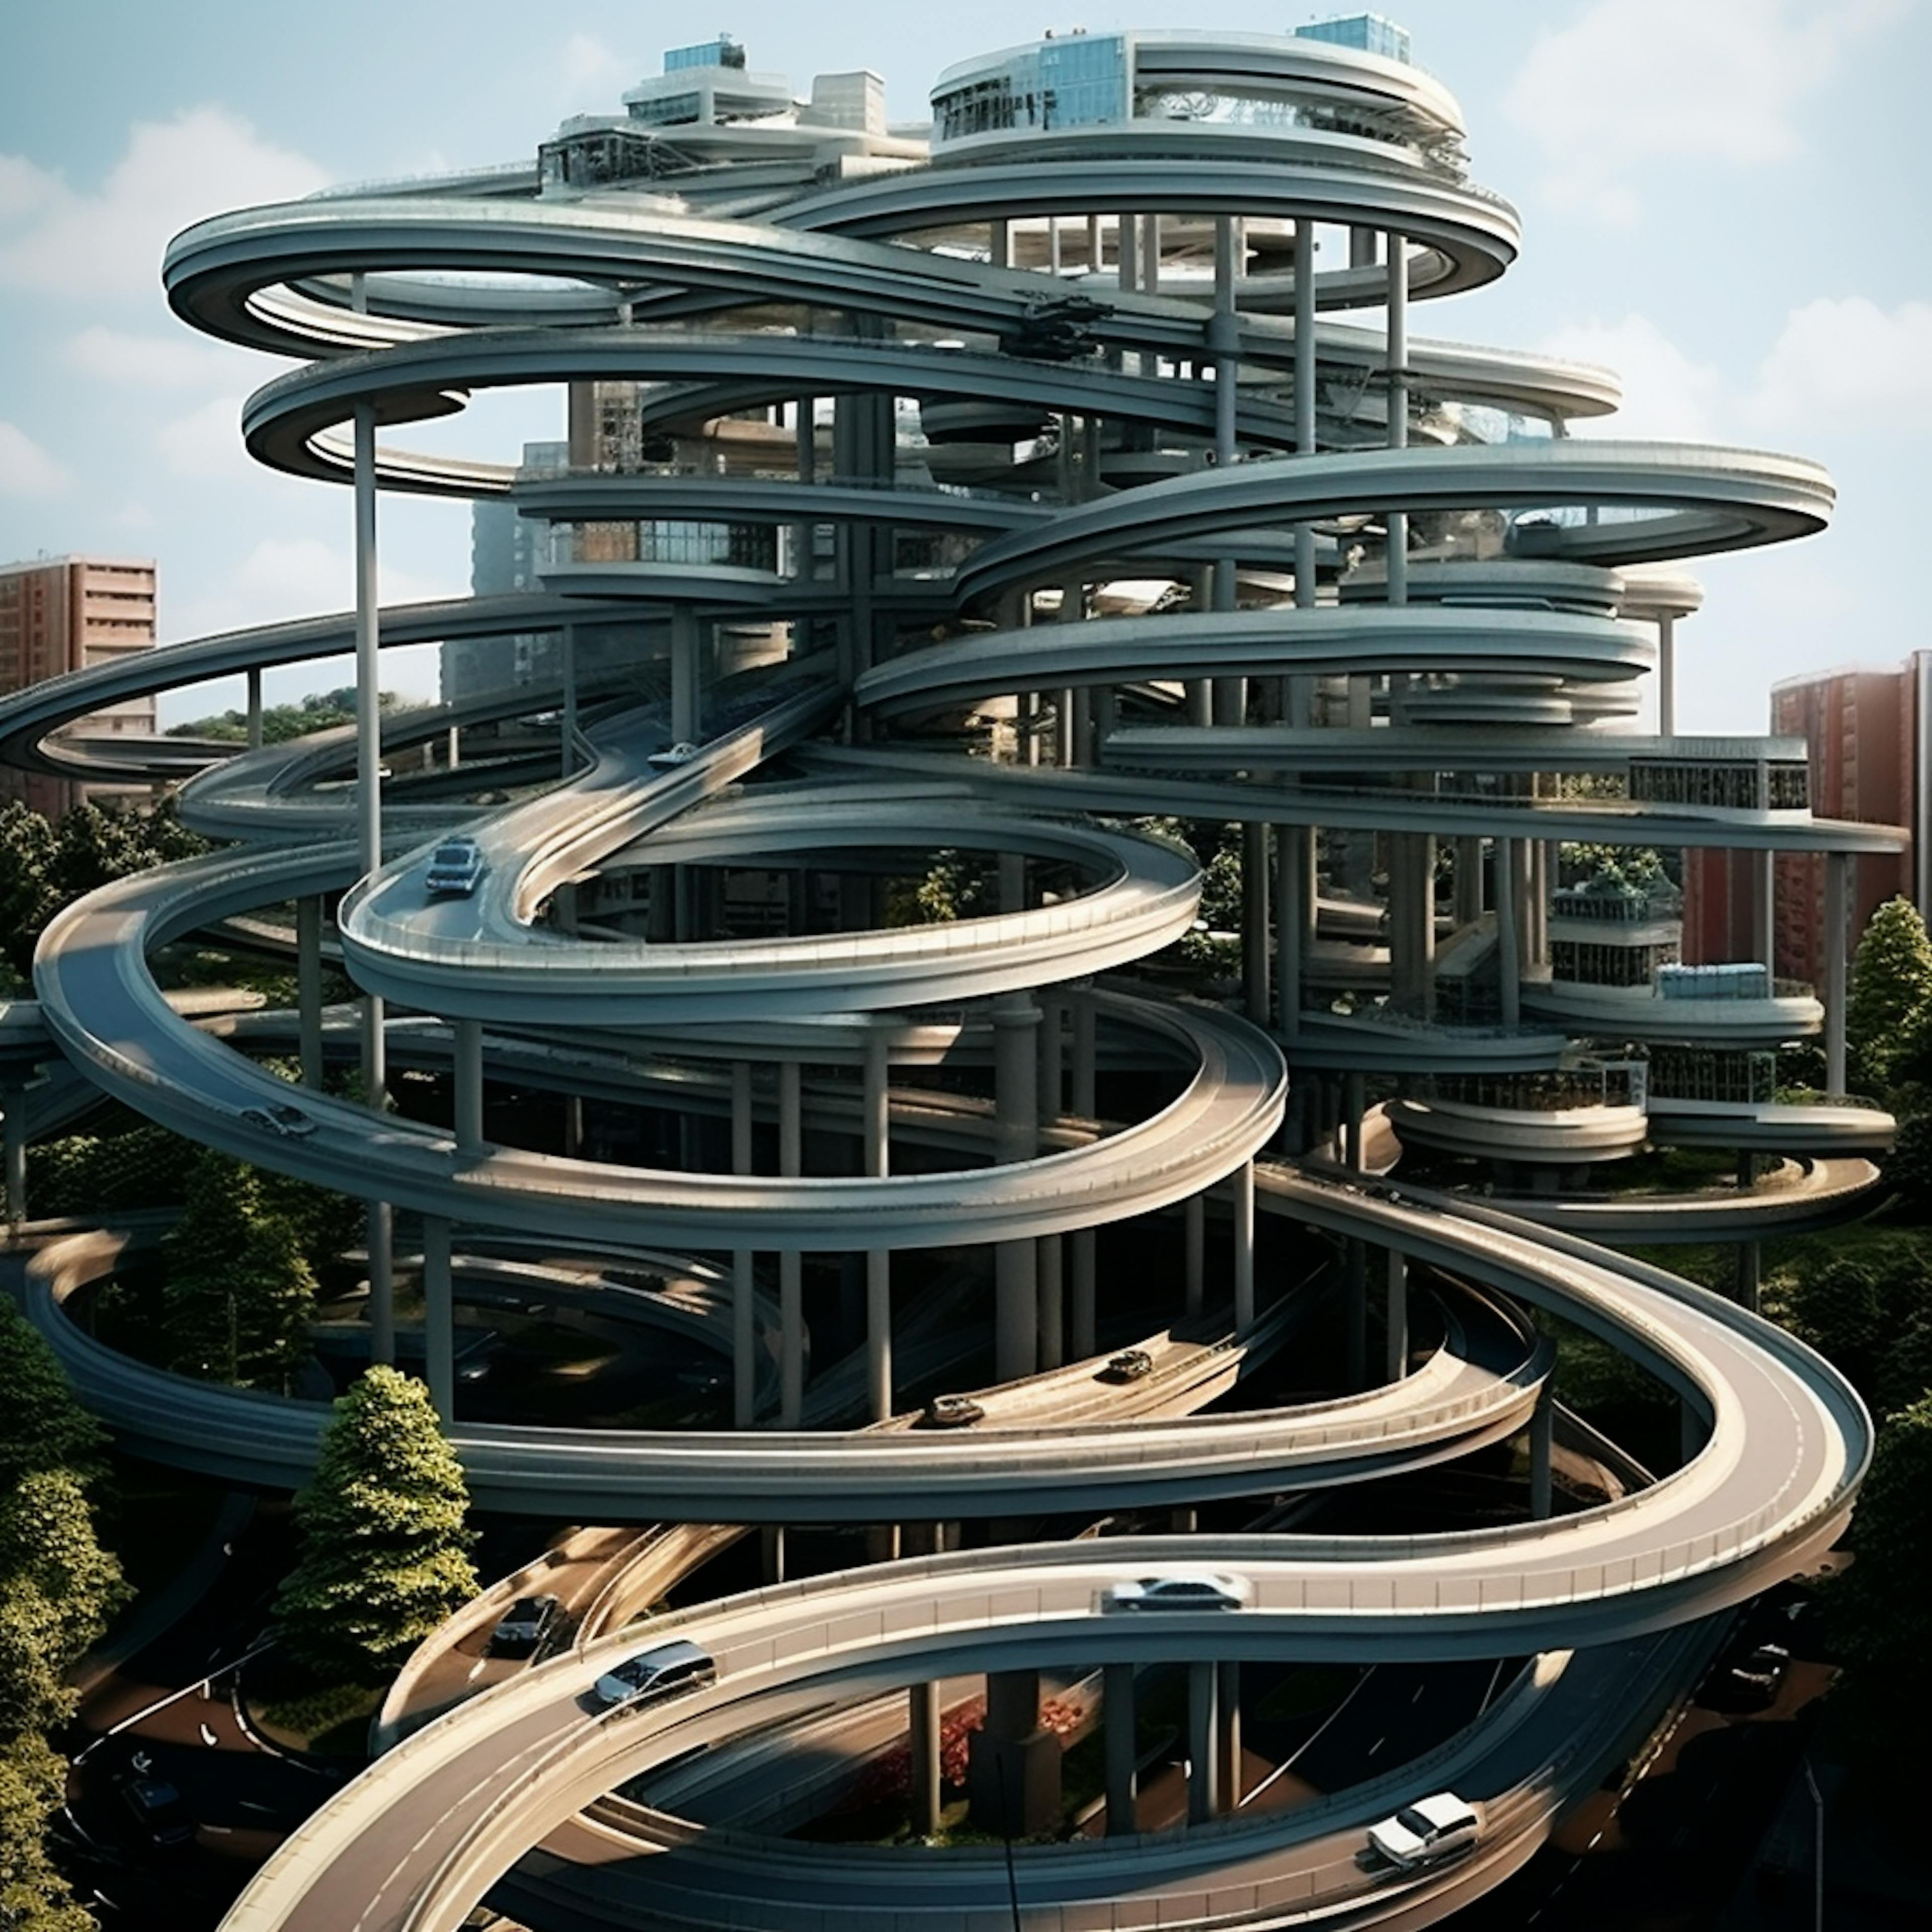 A crazy spiral highway